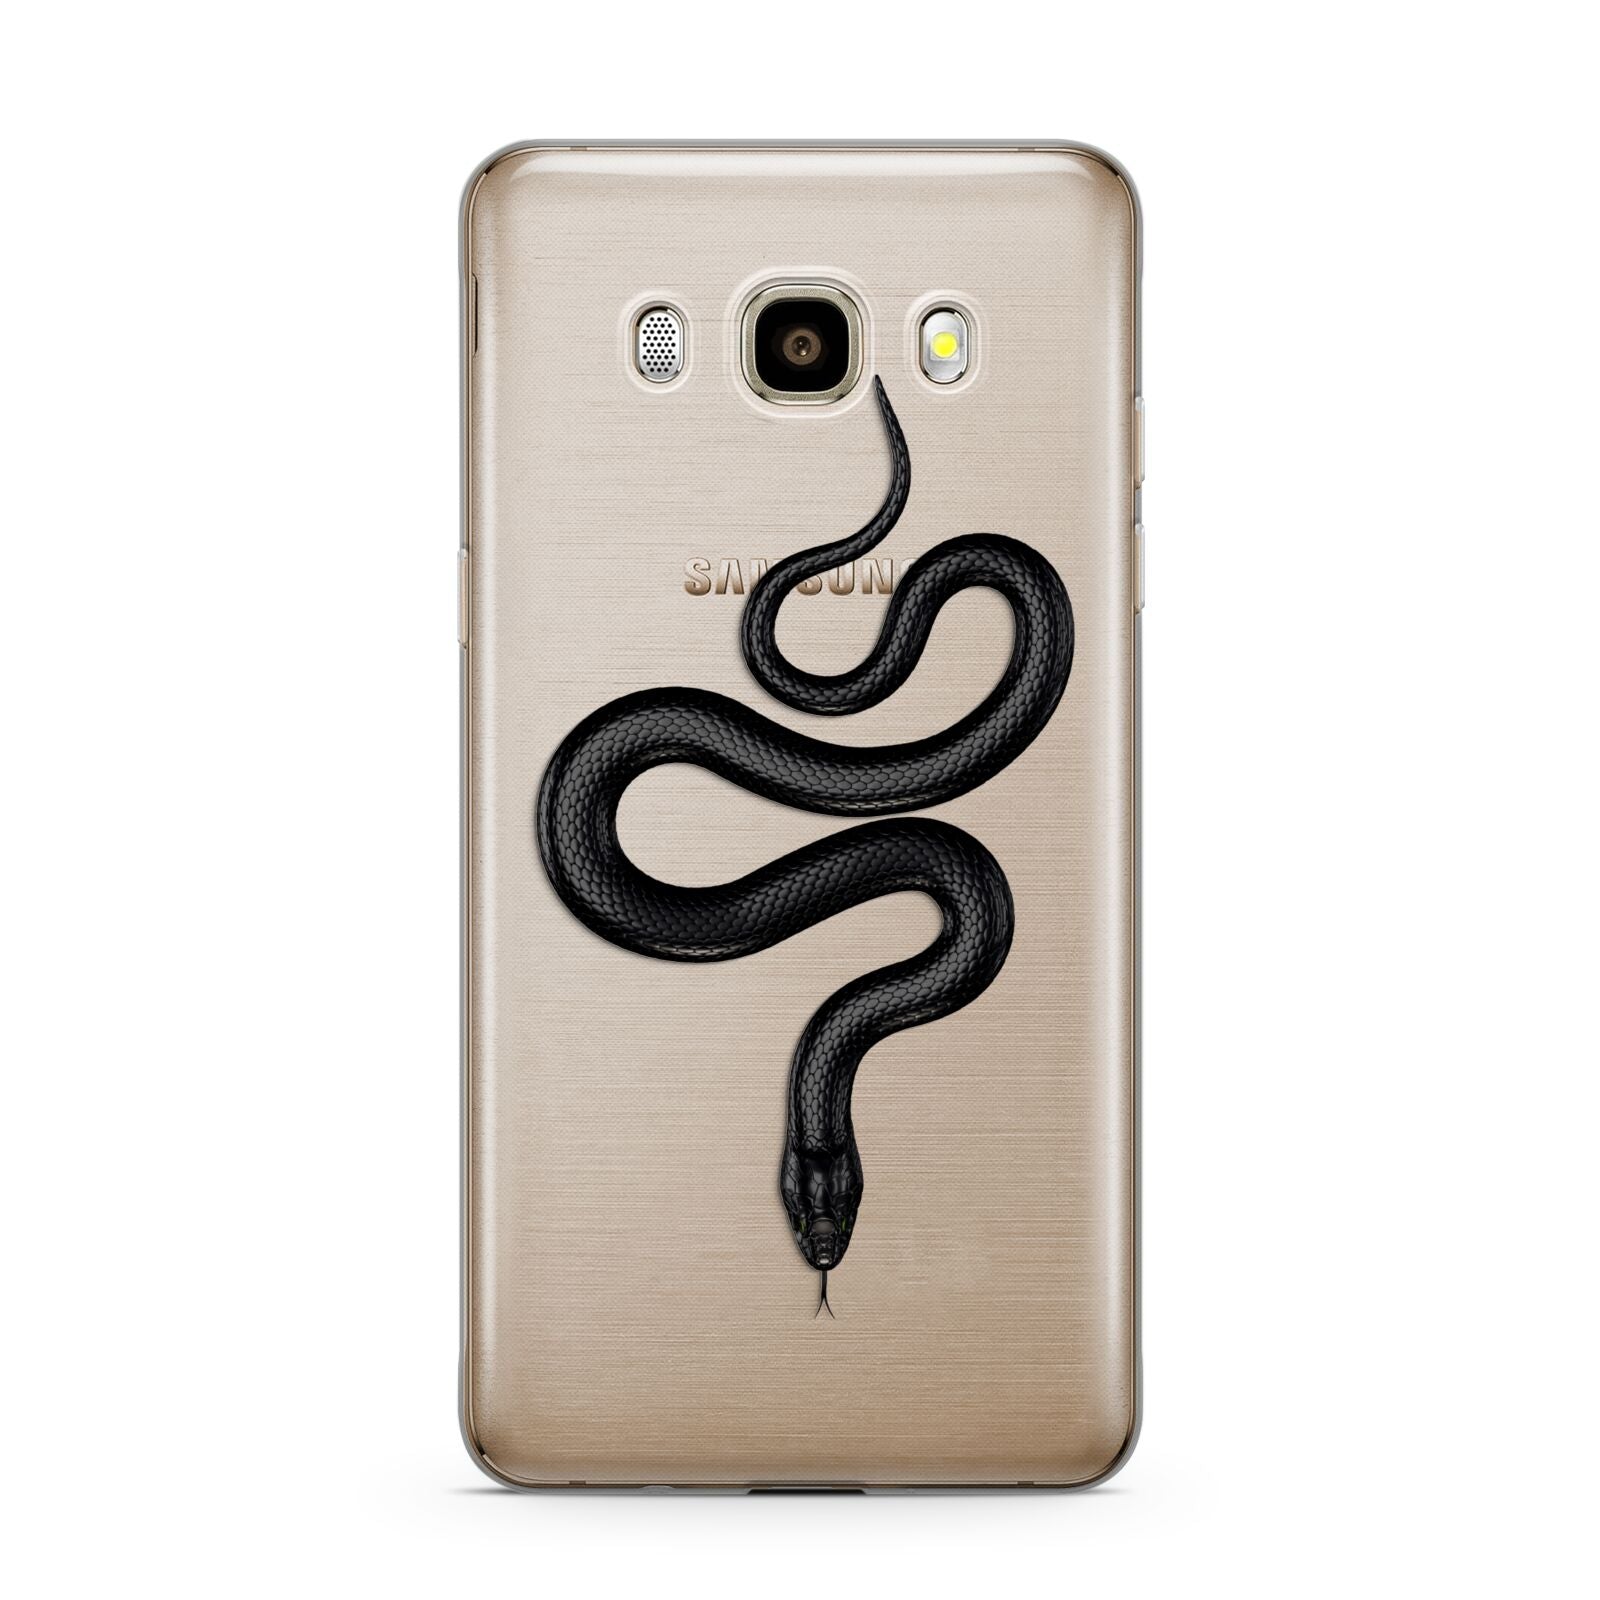 Snake Samsung Galaxy J7 2016 Case on gold phone